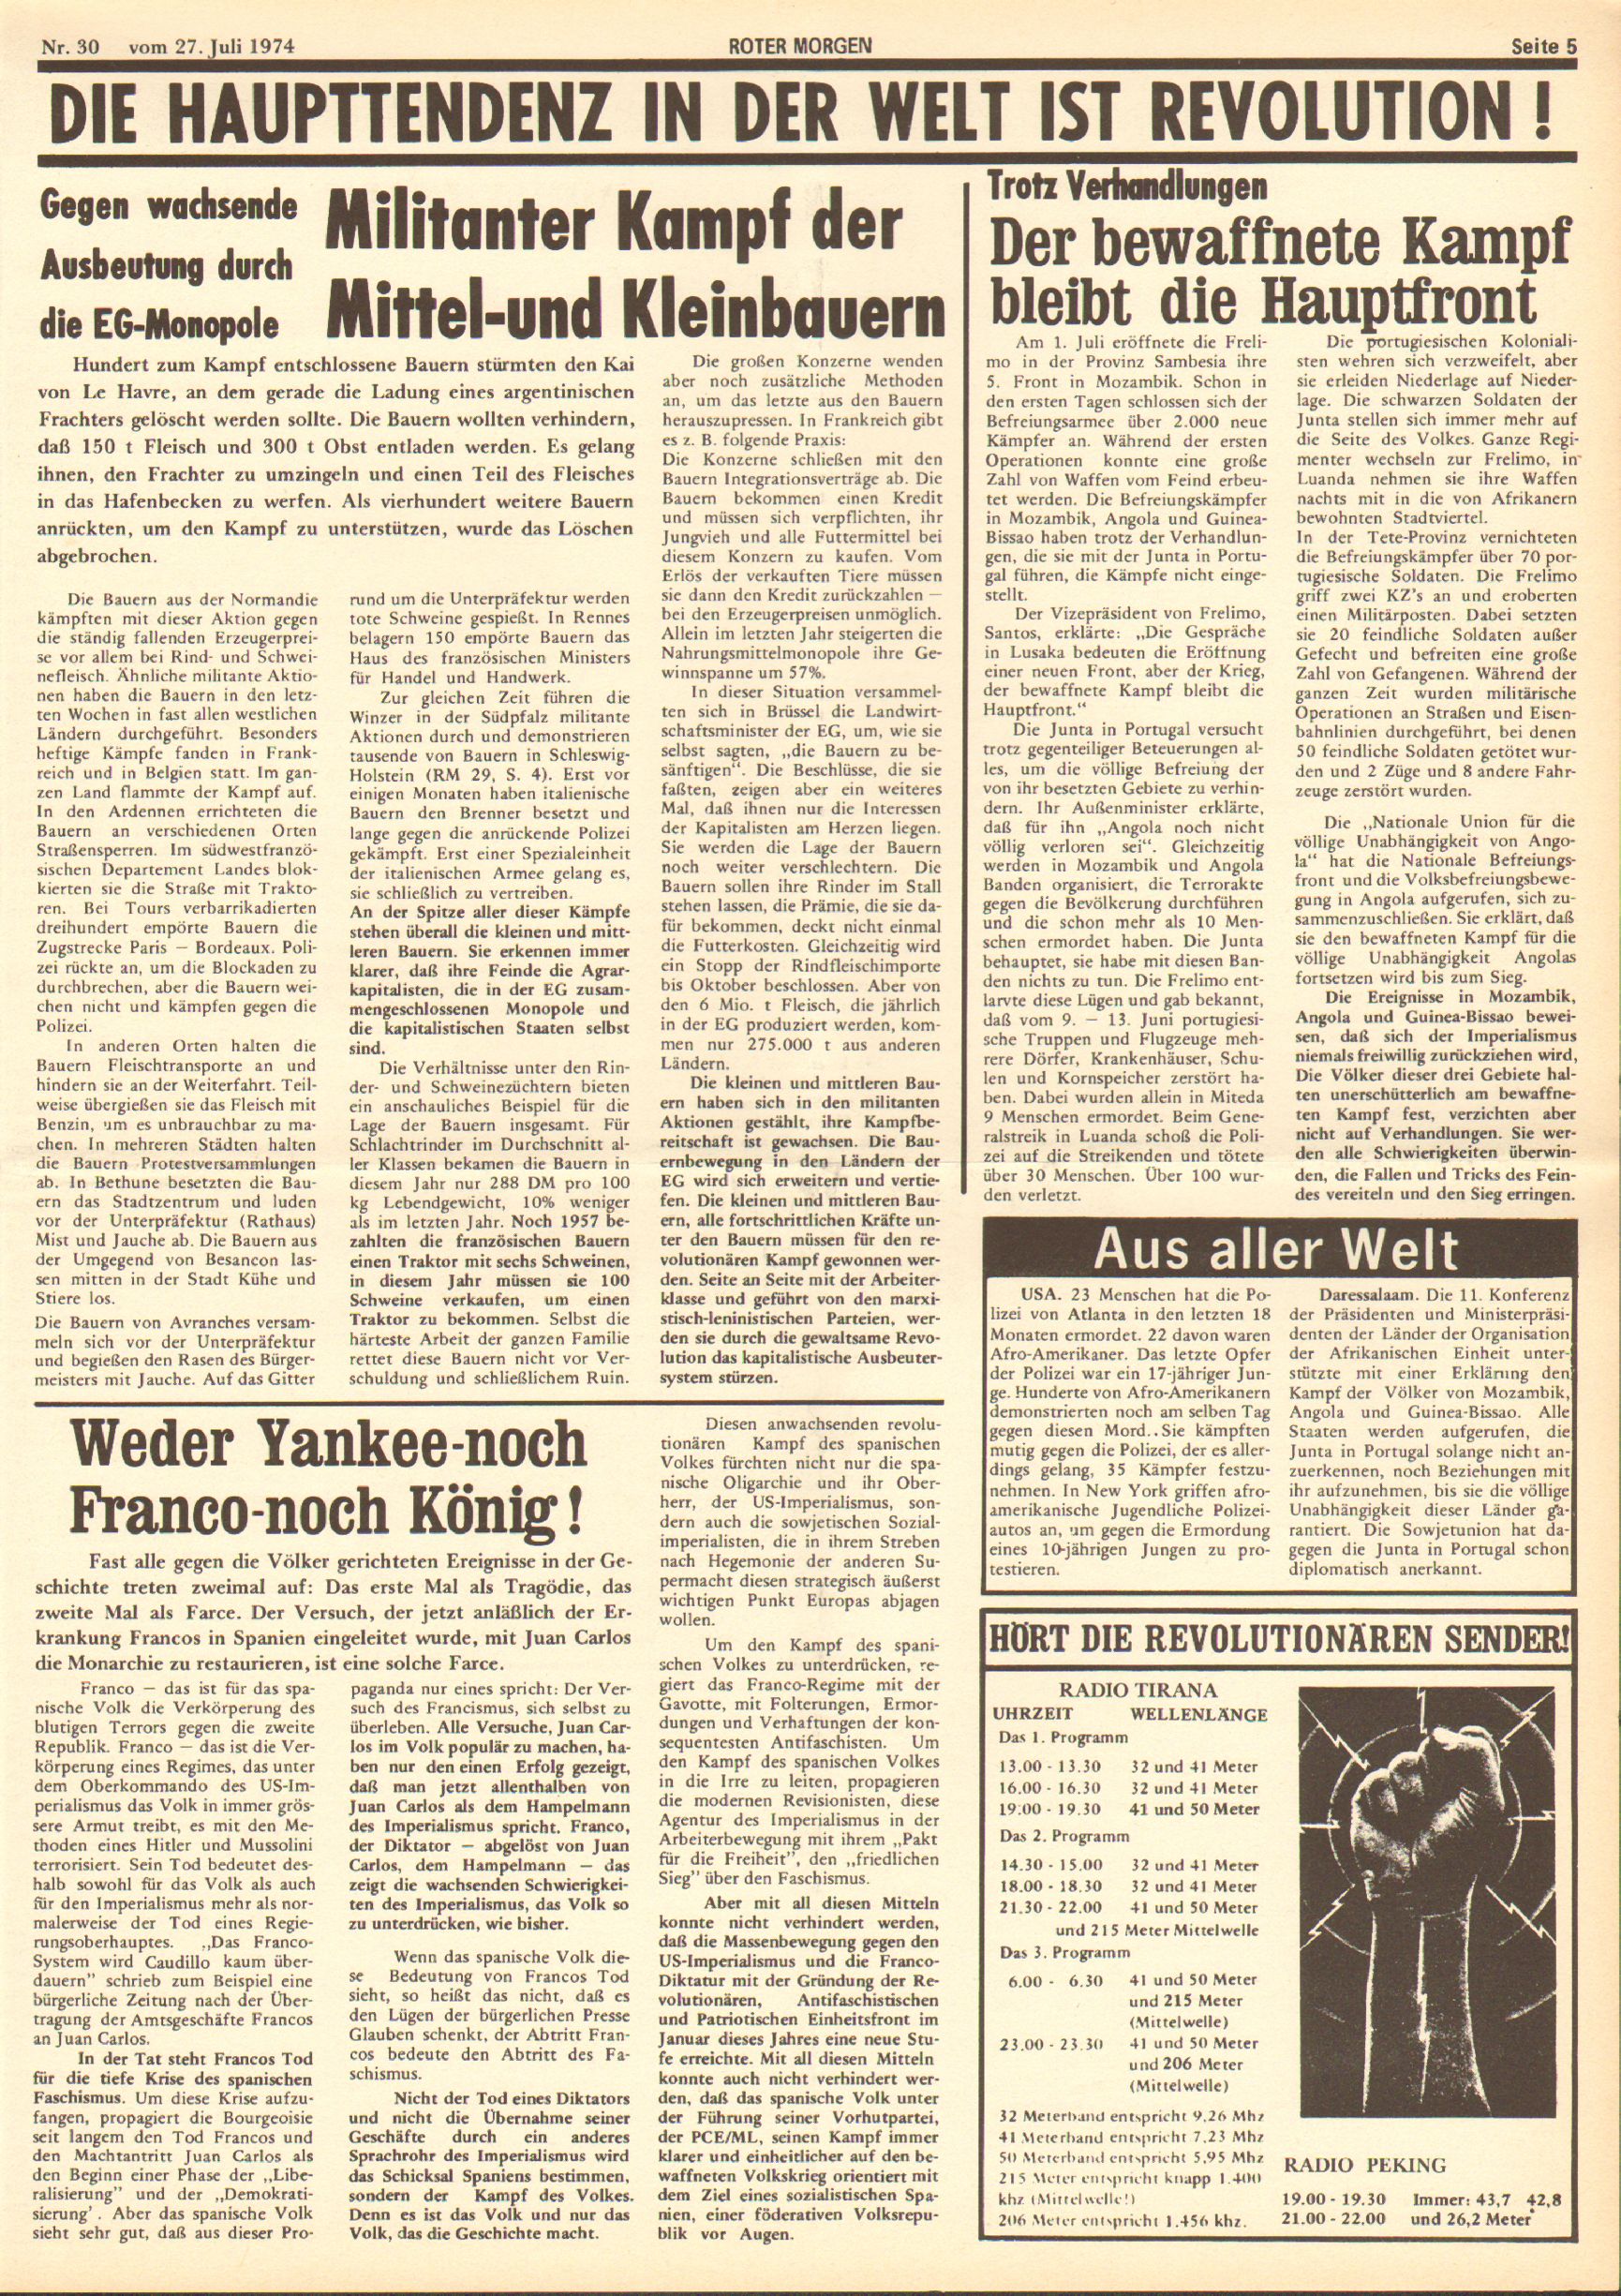 Roter Morgen, 8. Jg., 27. Juli 1974, Nr. 30, Seite 5